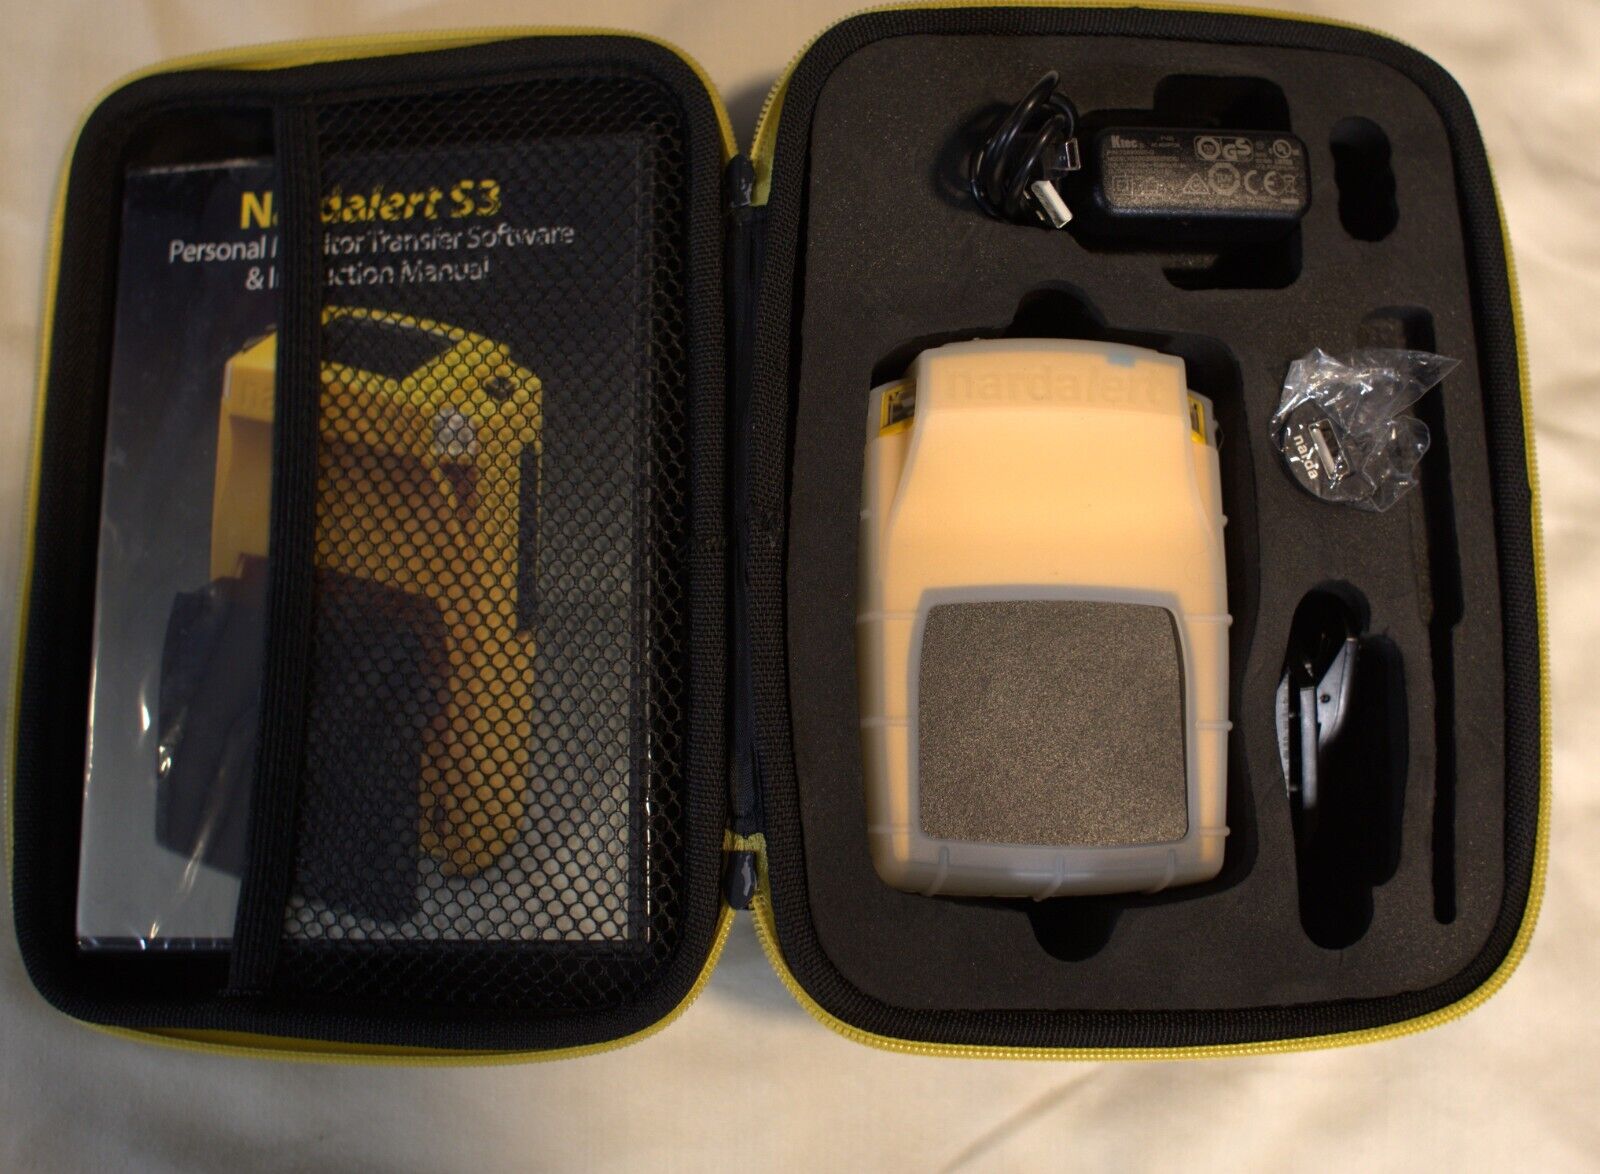 Narda Nardalert S3 2270/01 Personal Radiation Monitor with 2271/01 50GHz Sensor